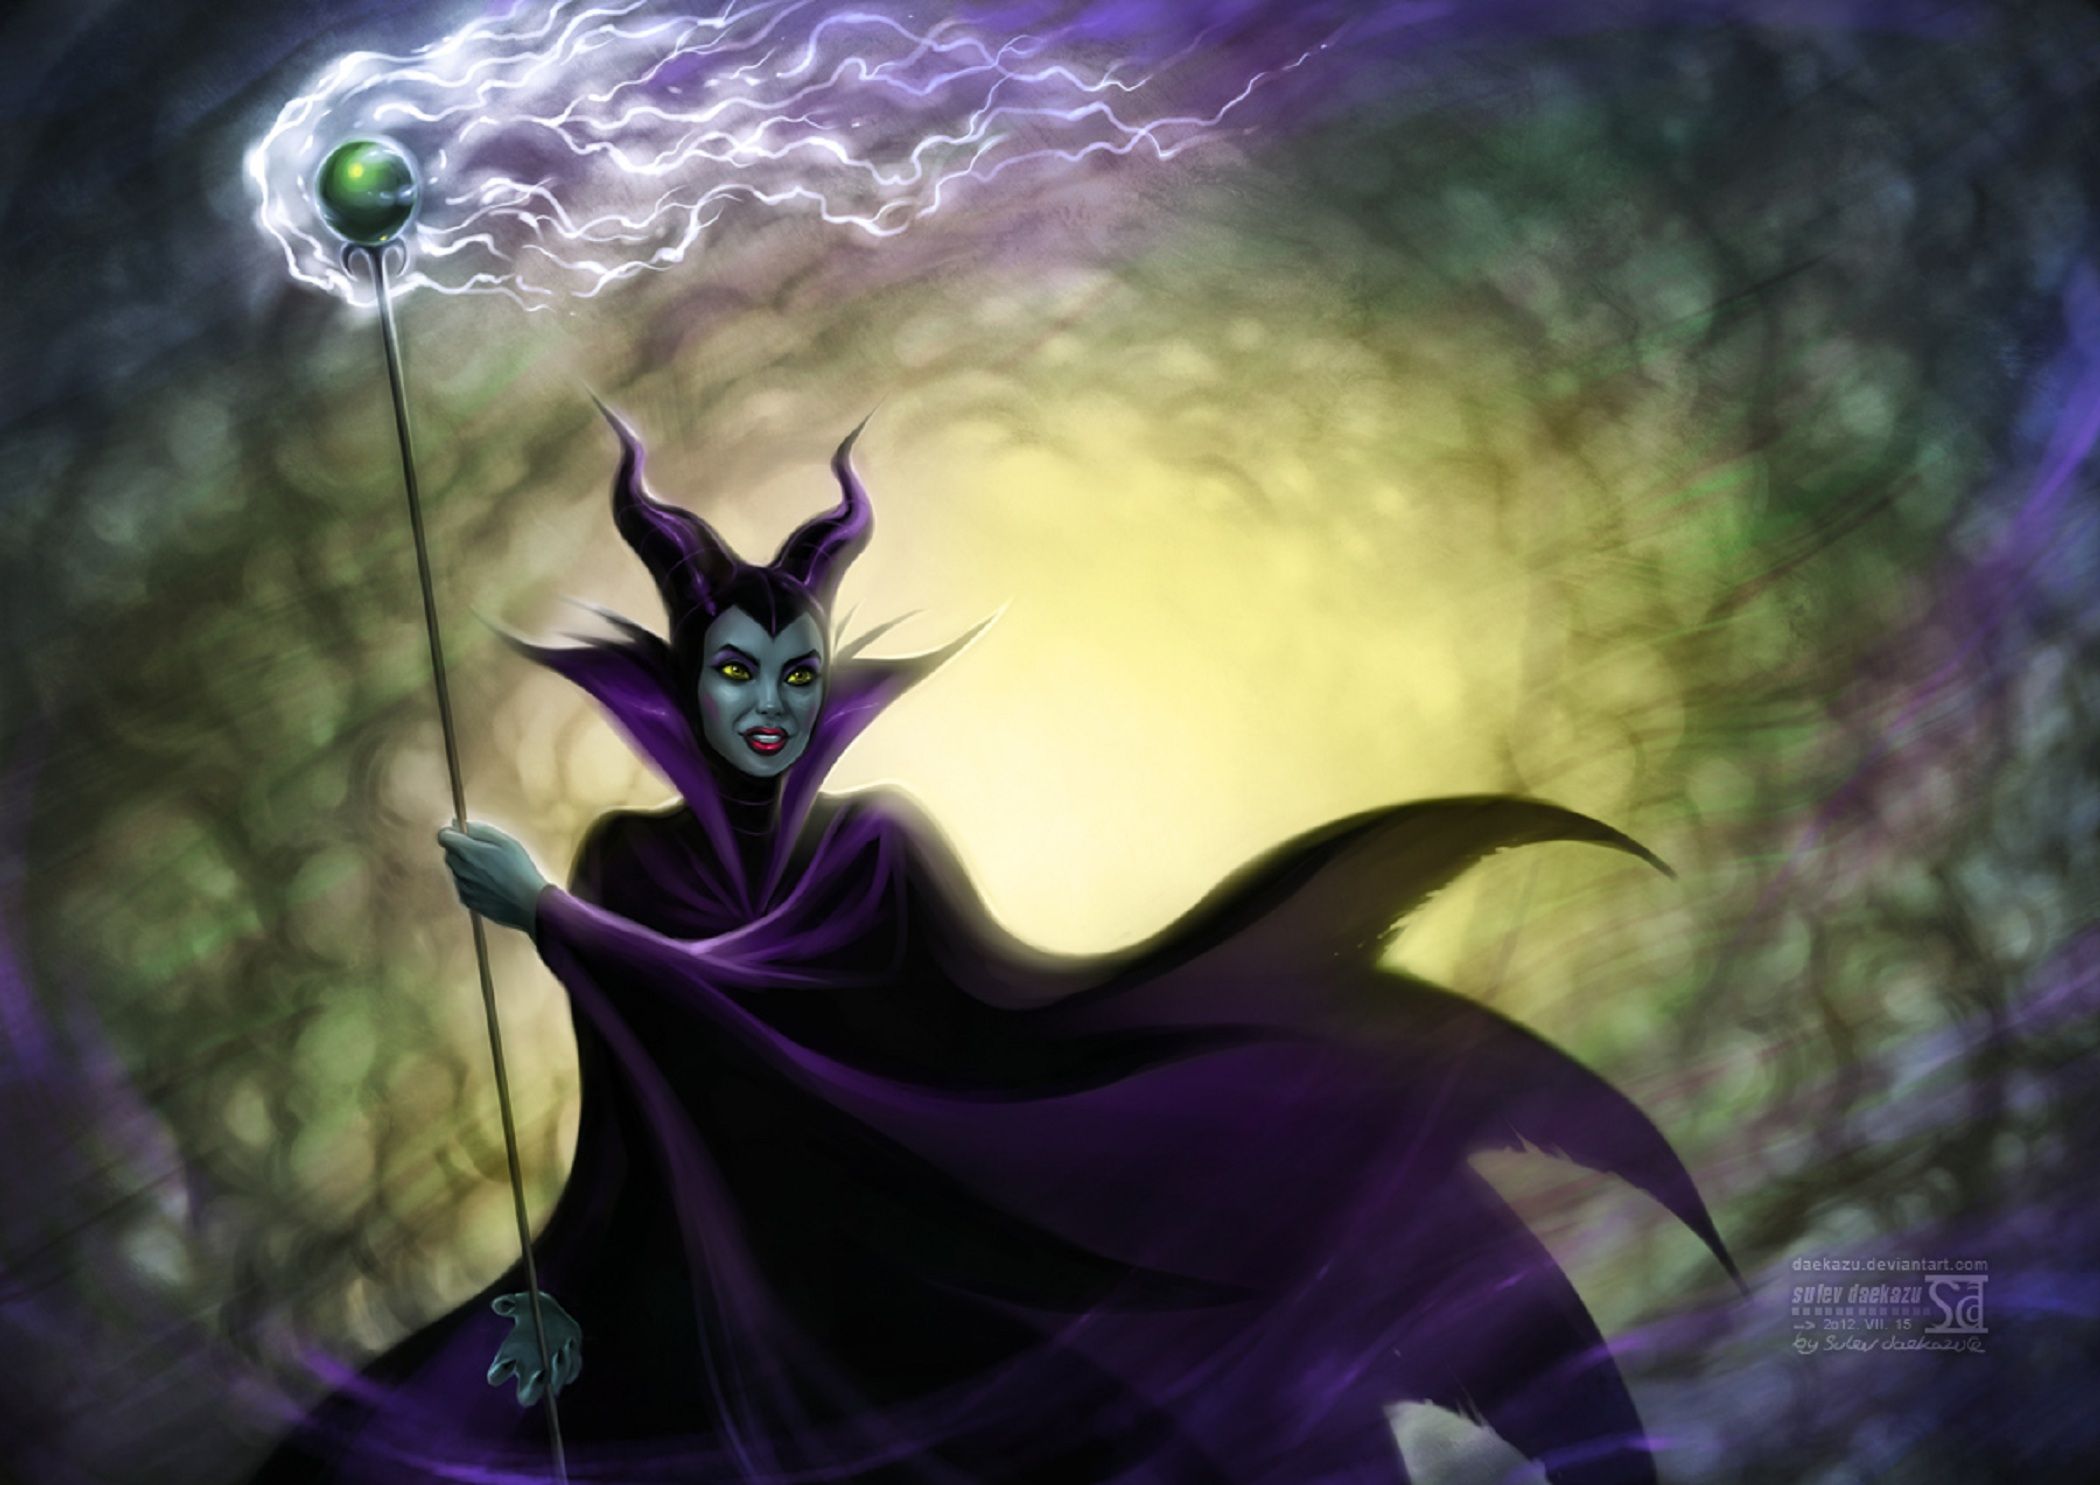 Maleficent Wallpaper Free #ez17 VaLvewz.com